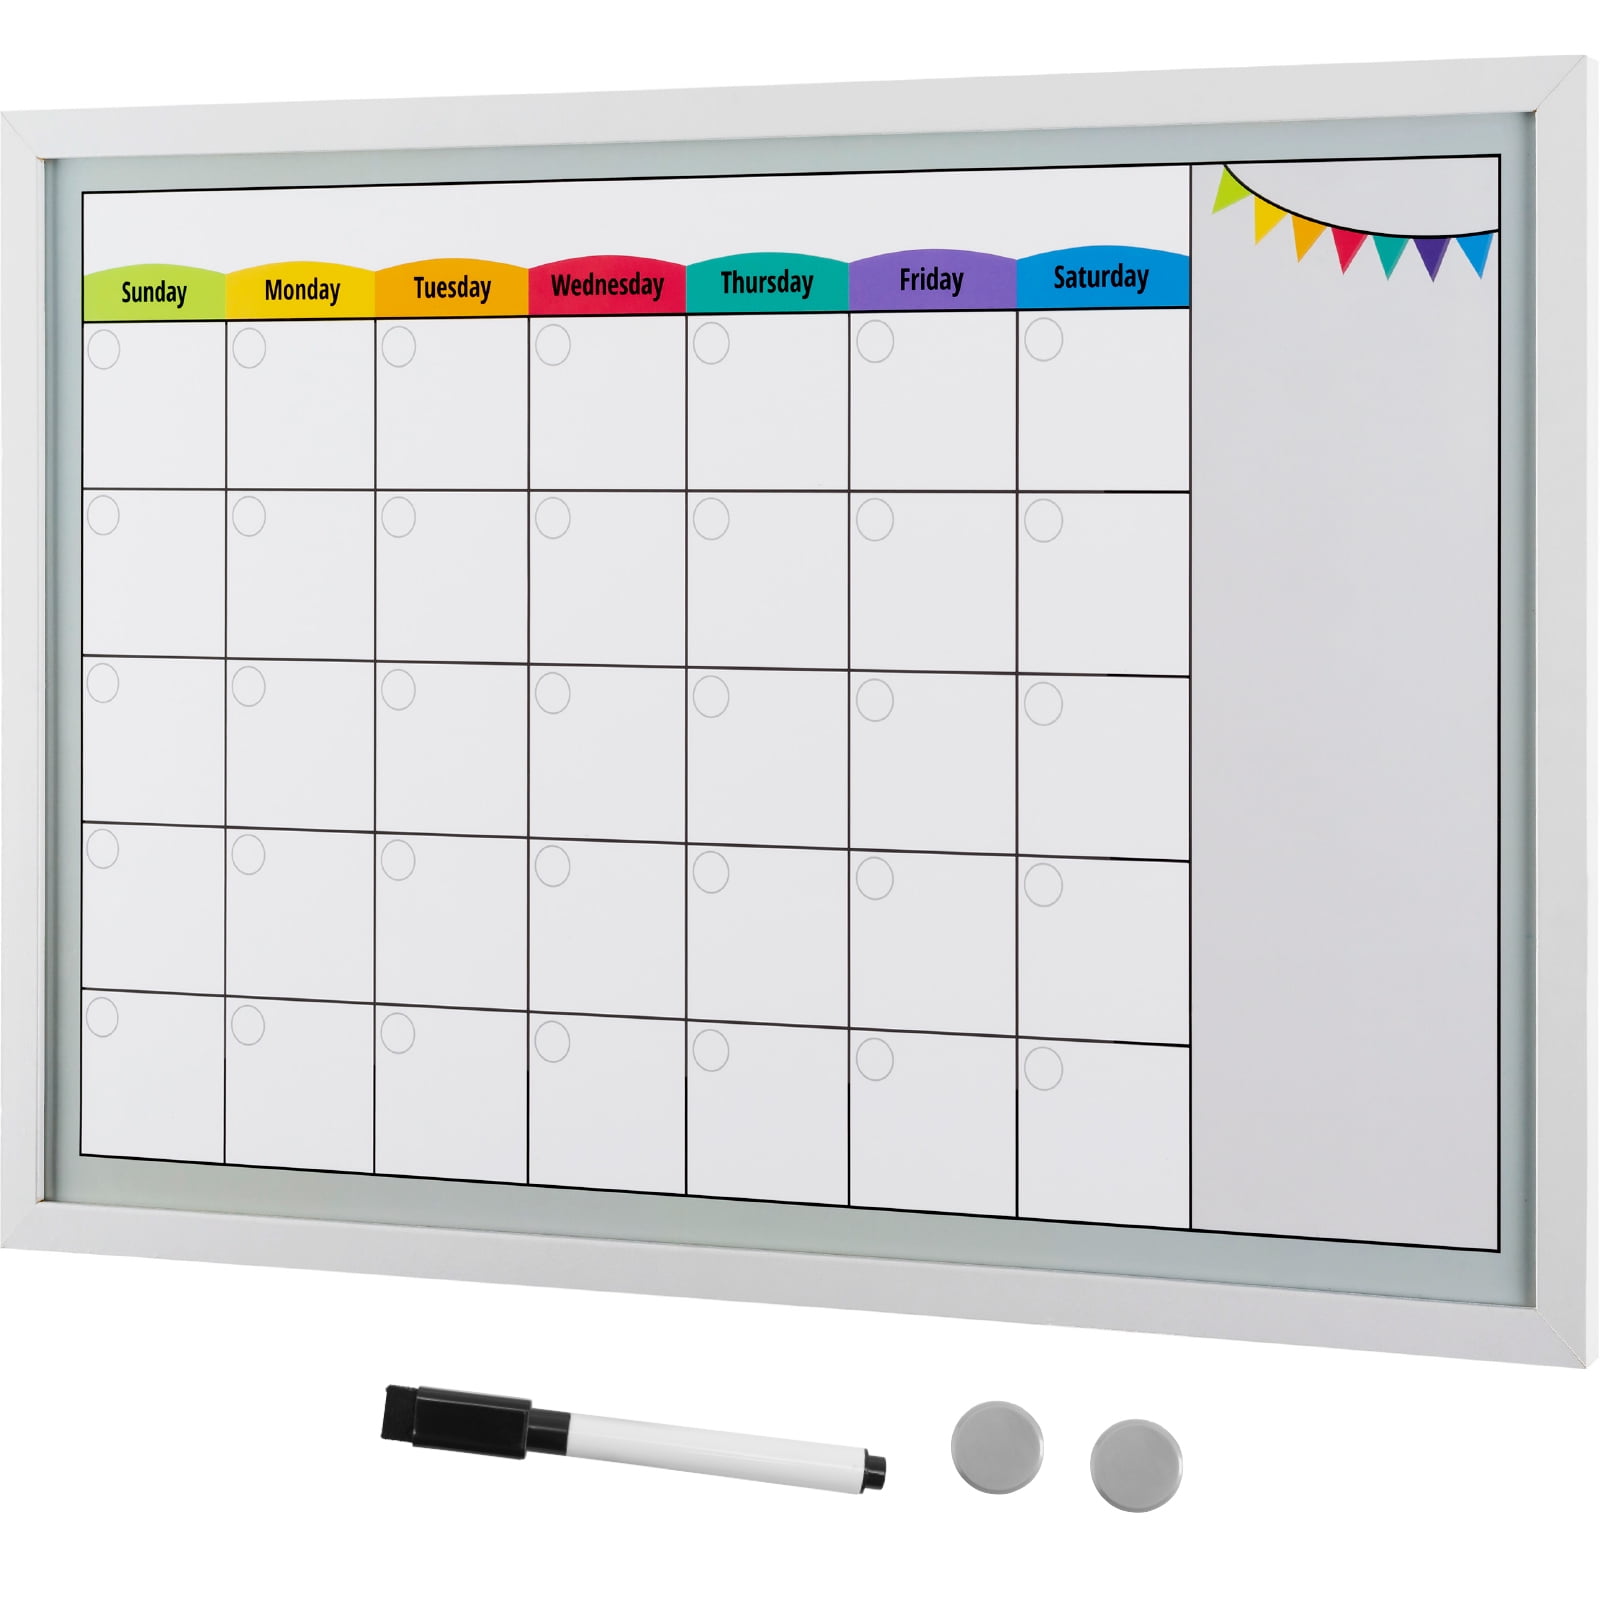 Whiteboard Weekly Calendar Target